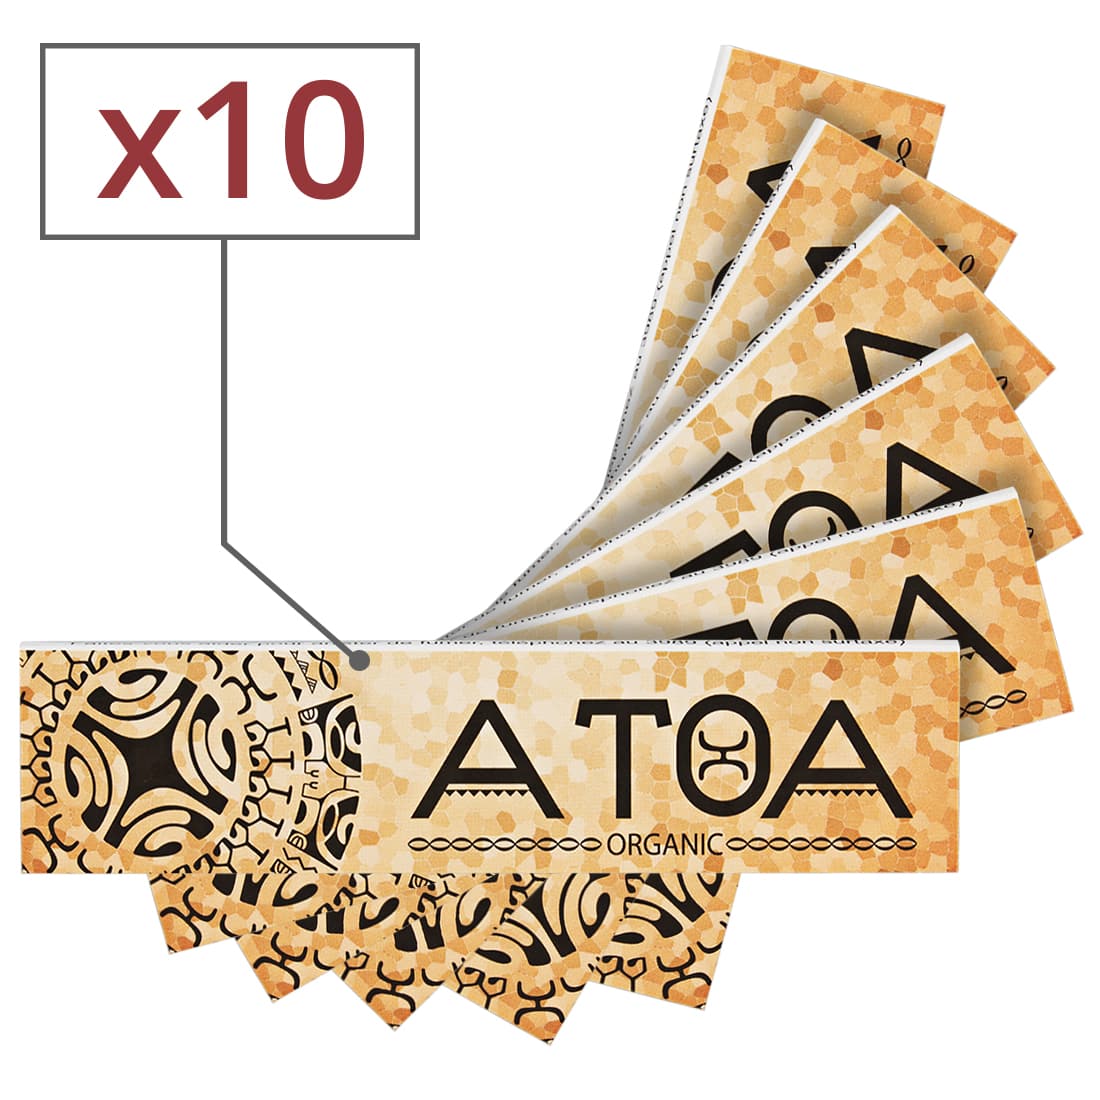 Papier à rouler ATOA Slim Organic  x 10